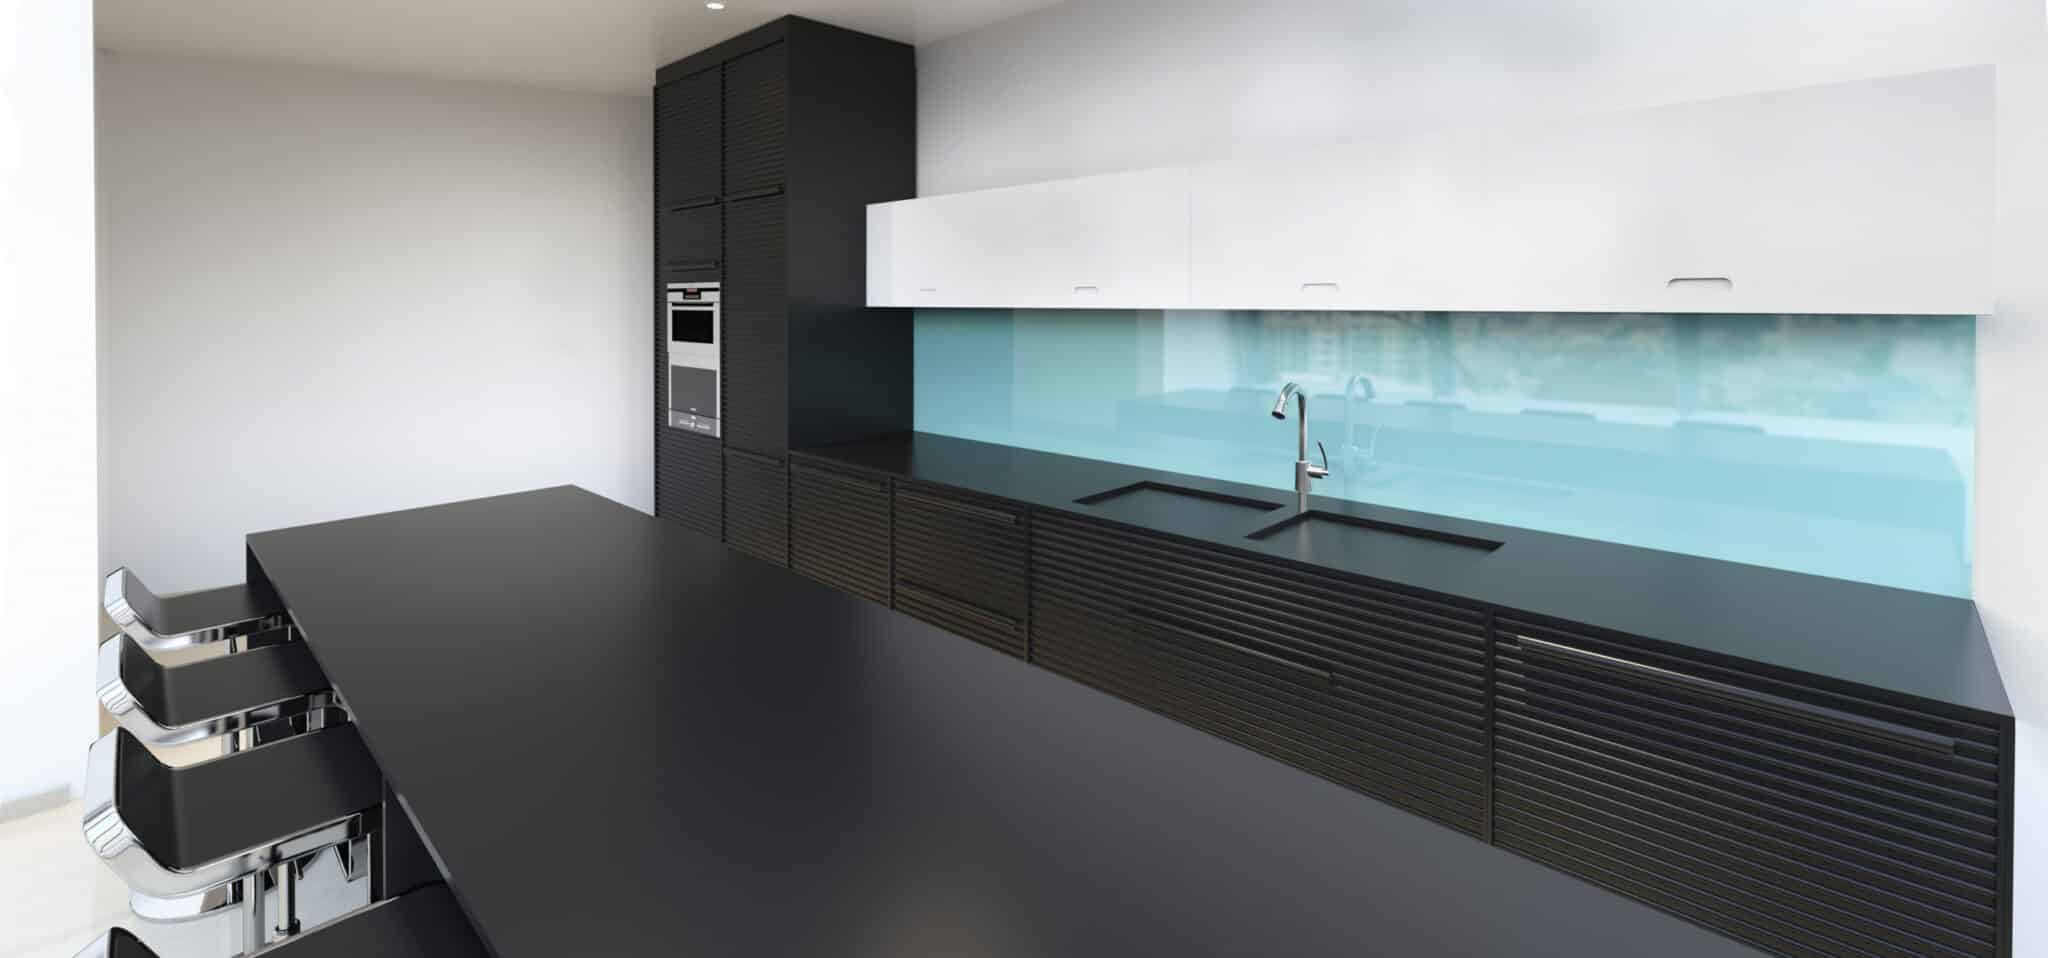 Modern kitchen with a colored black backsplash